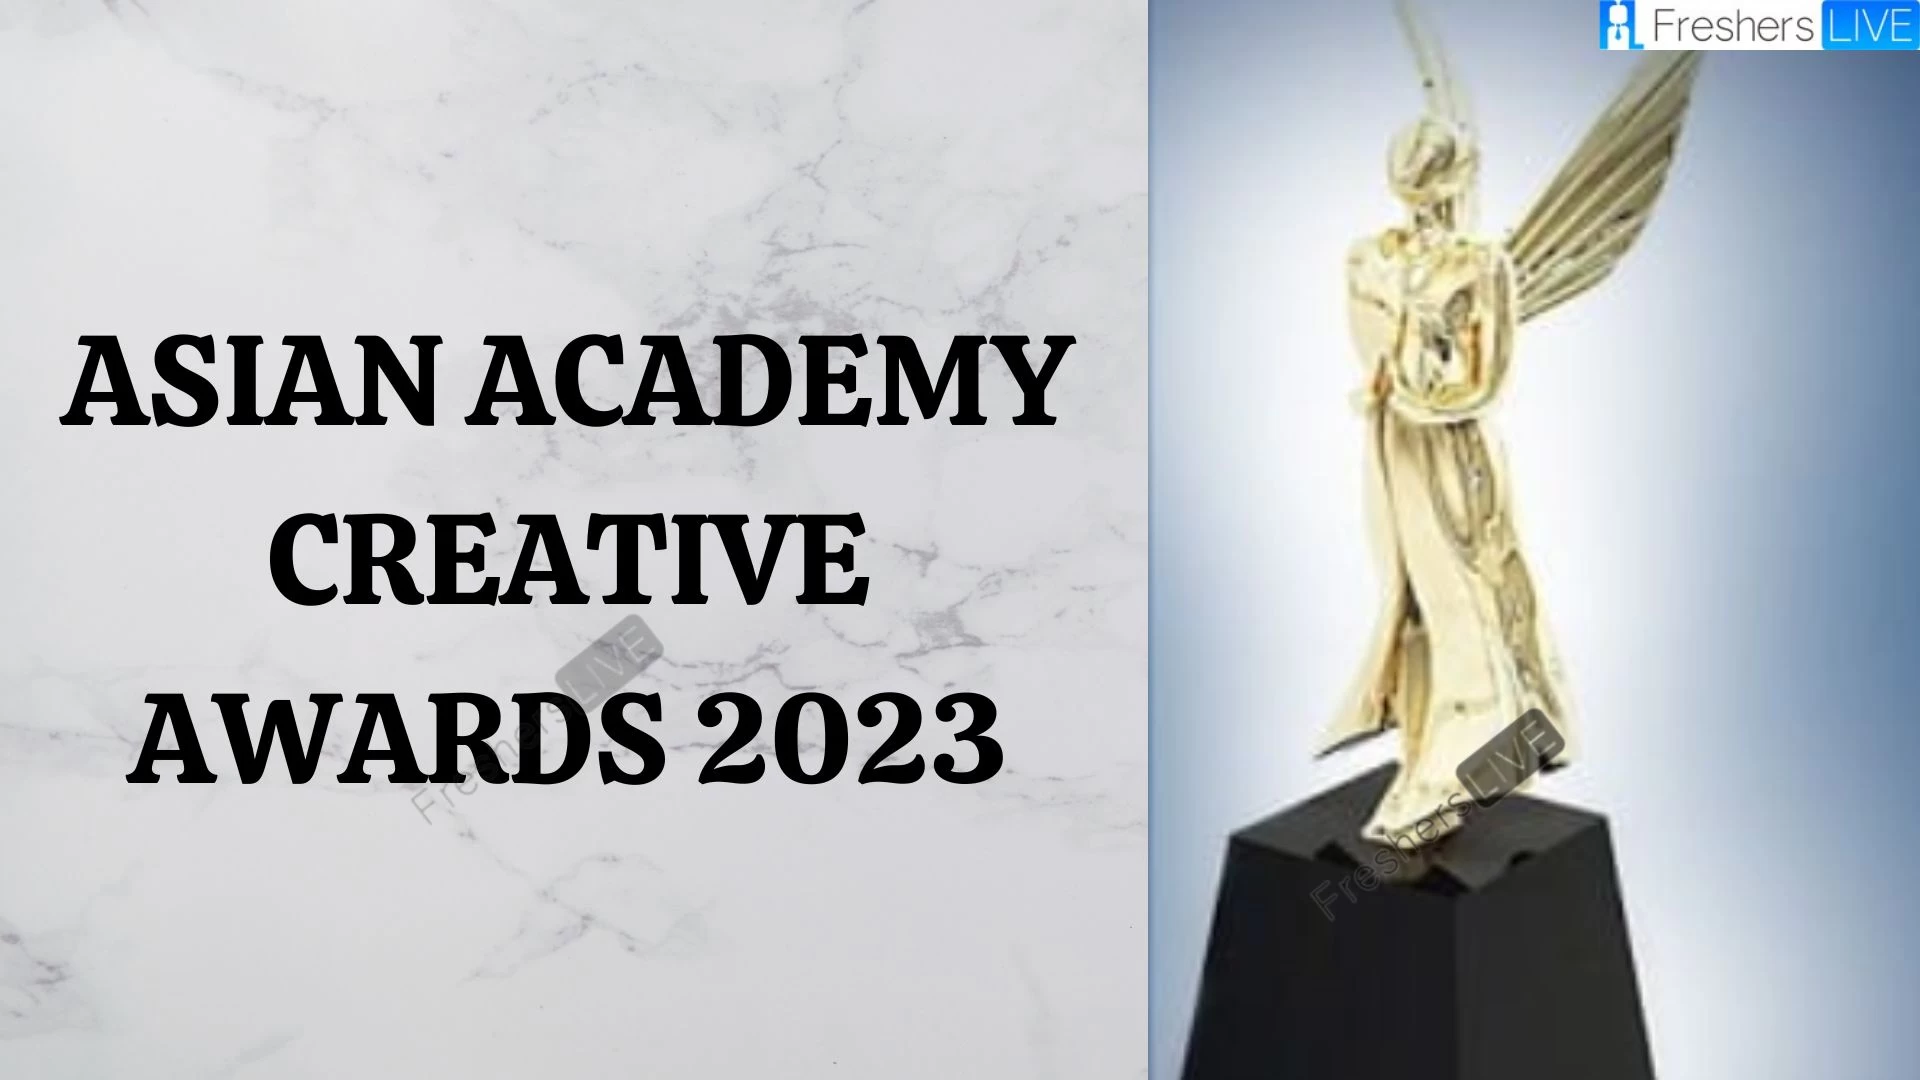 Asian Academy Creative Awards 2023 Winners, Where to Watch Asian Academy Creative Awards 2023?